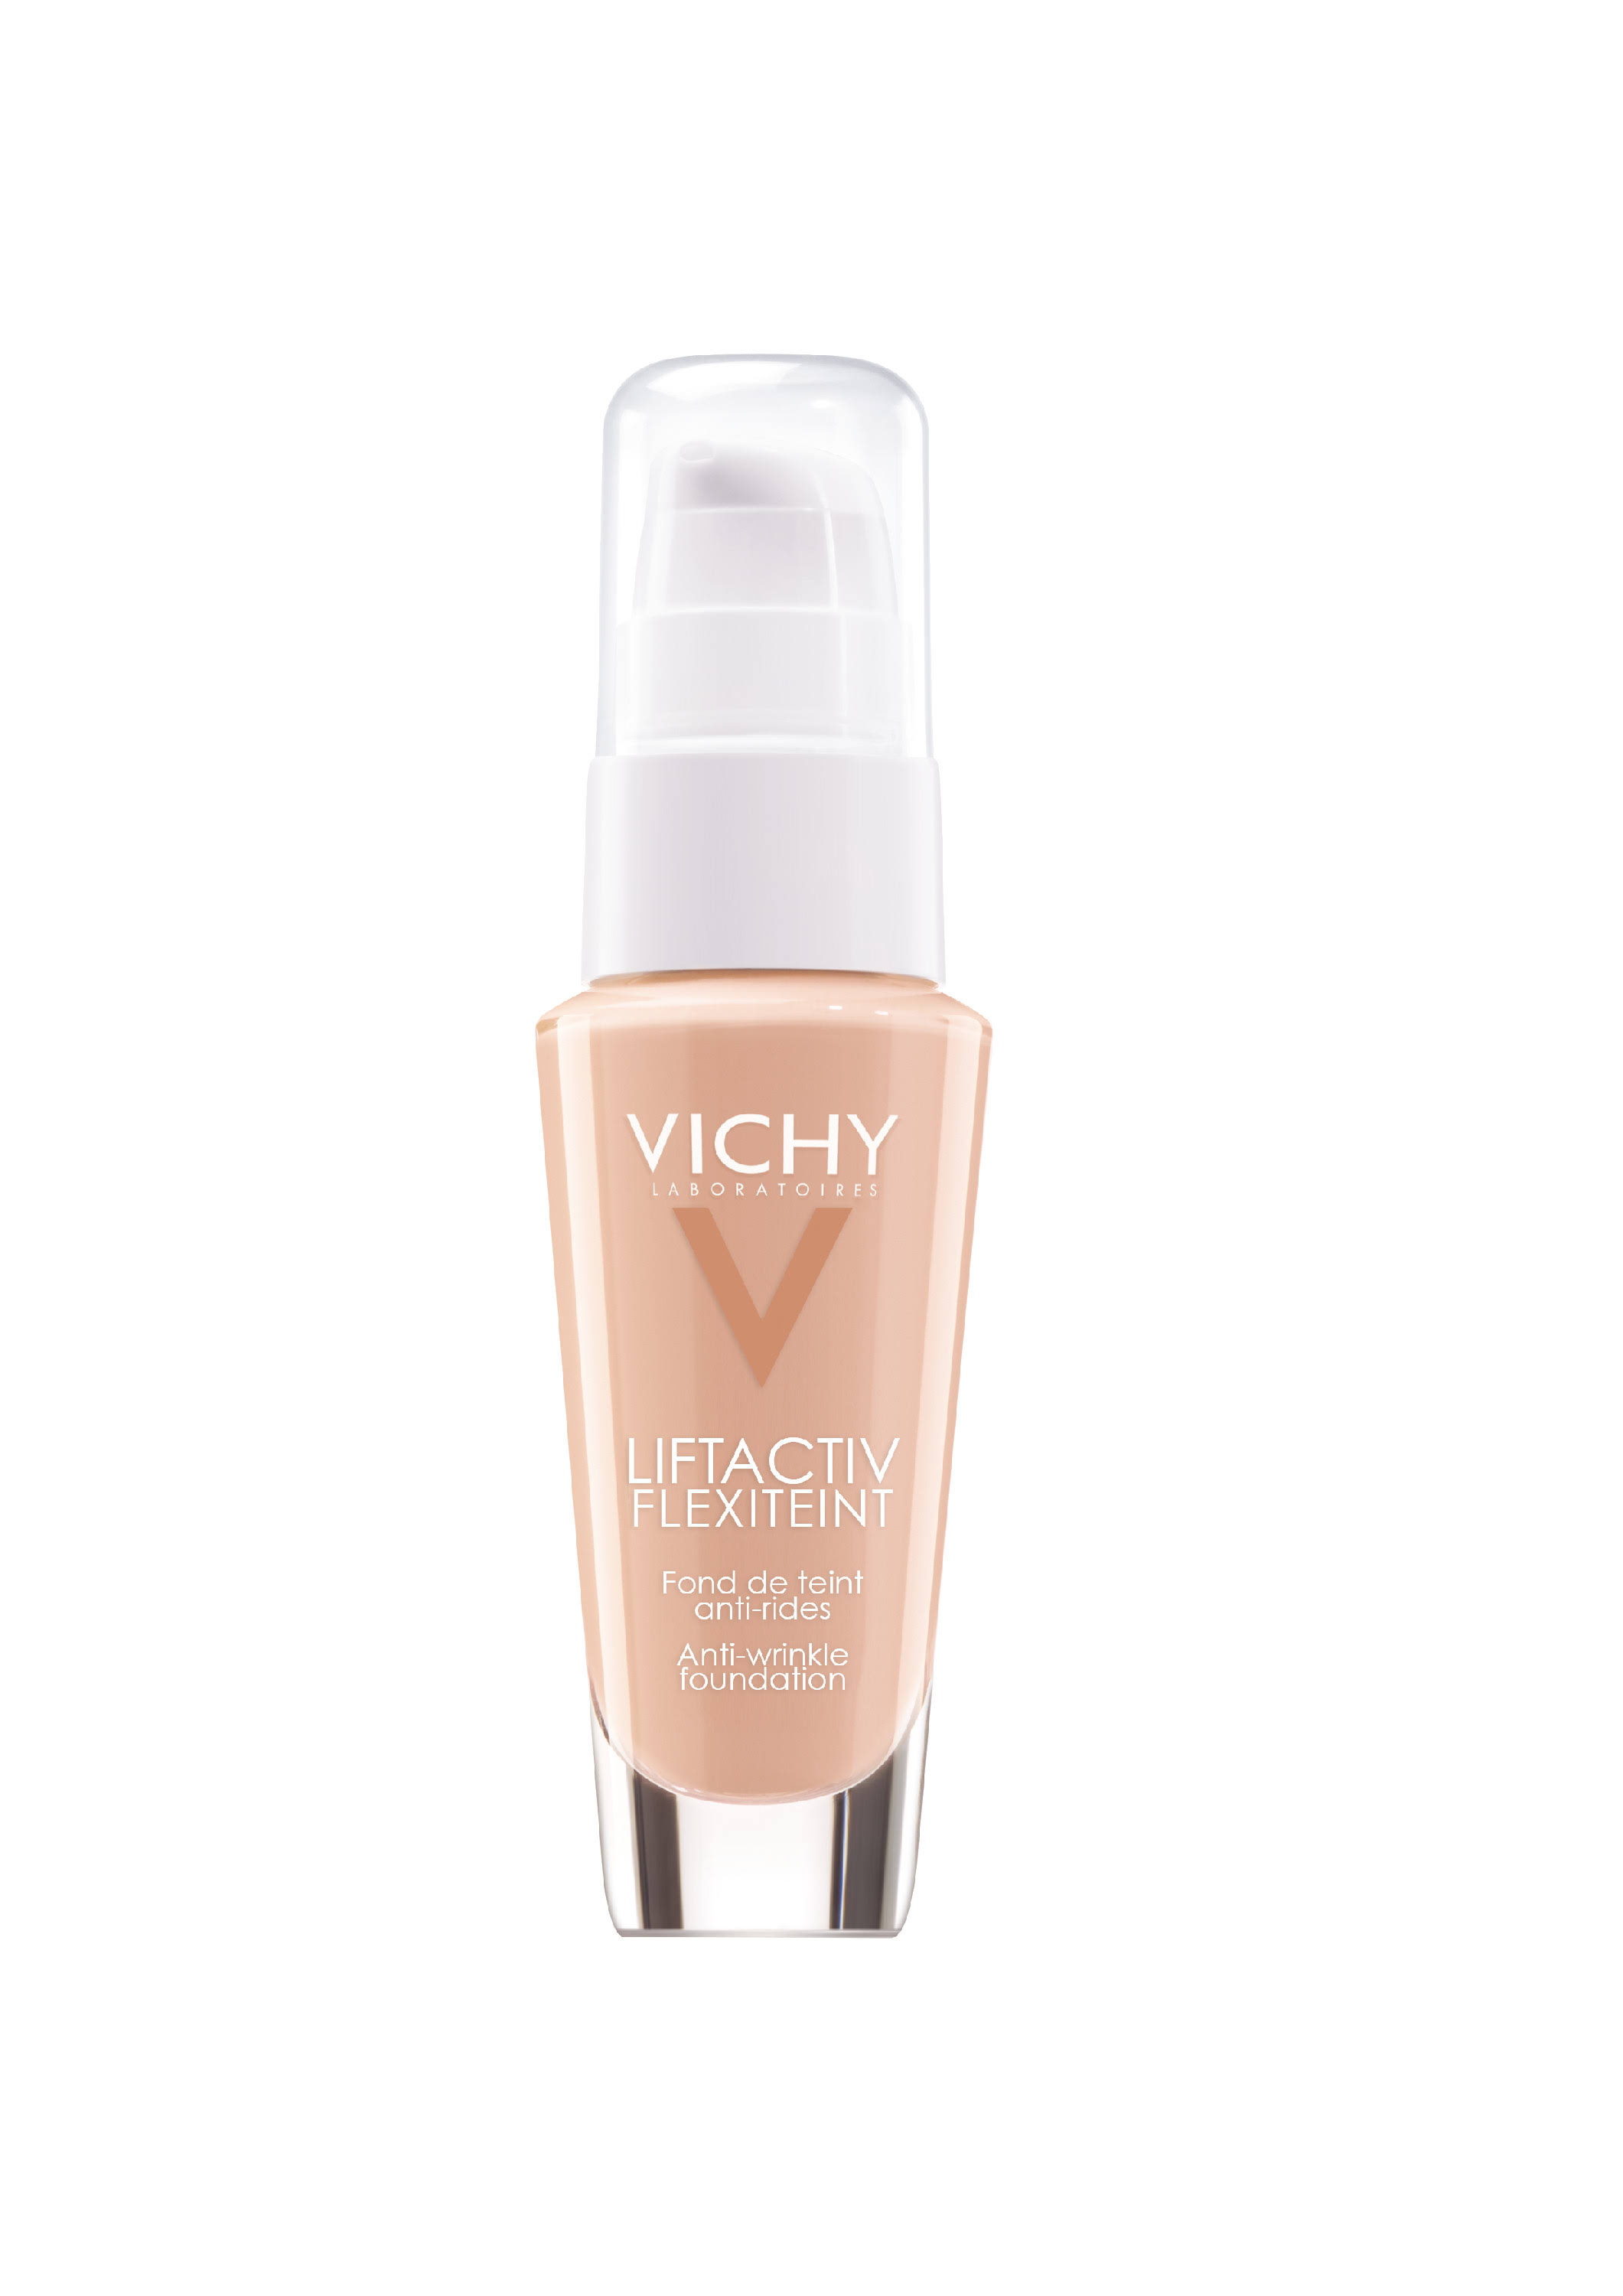 Vichy Liftactiv Flexiteint Anti Wrinkle Foundation - 30ml, 45 Gold